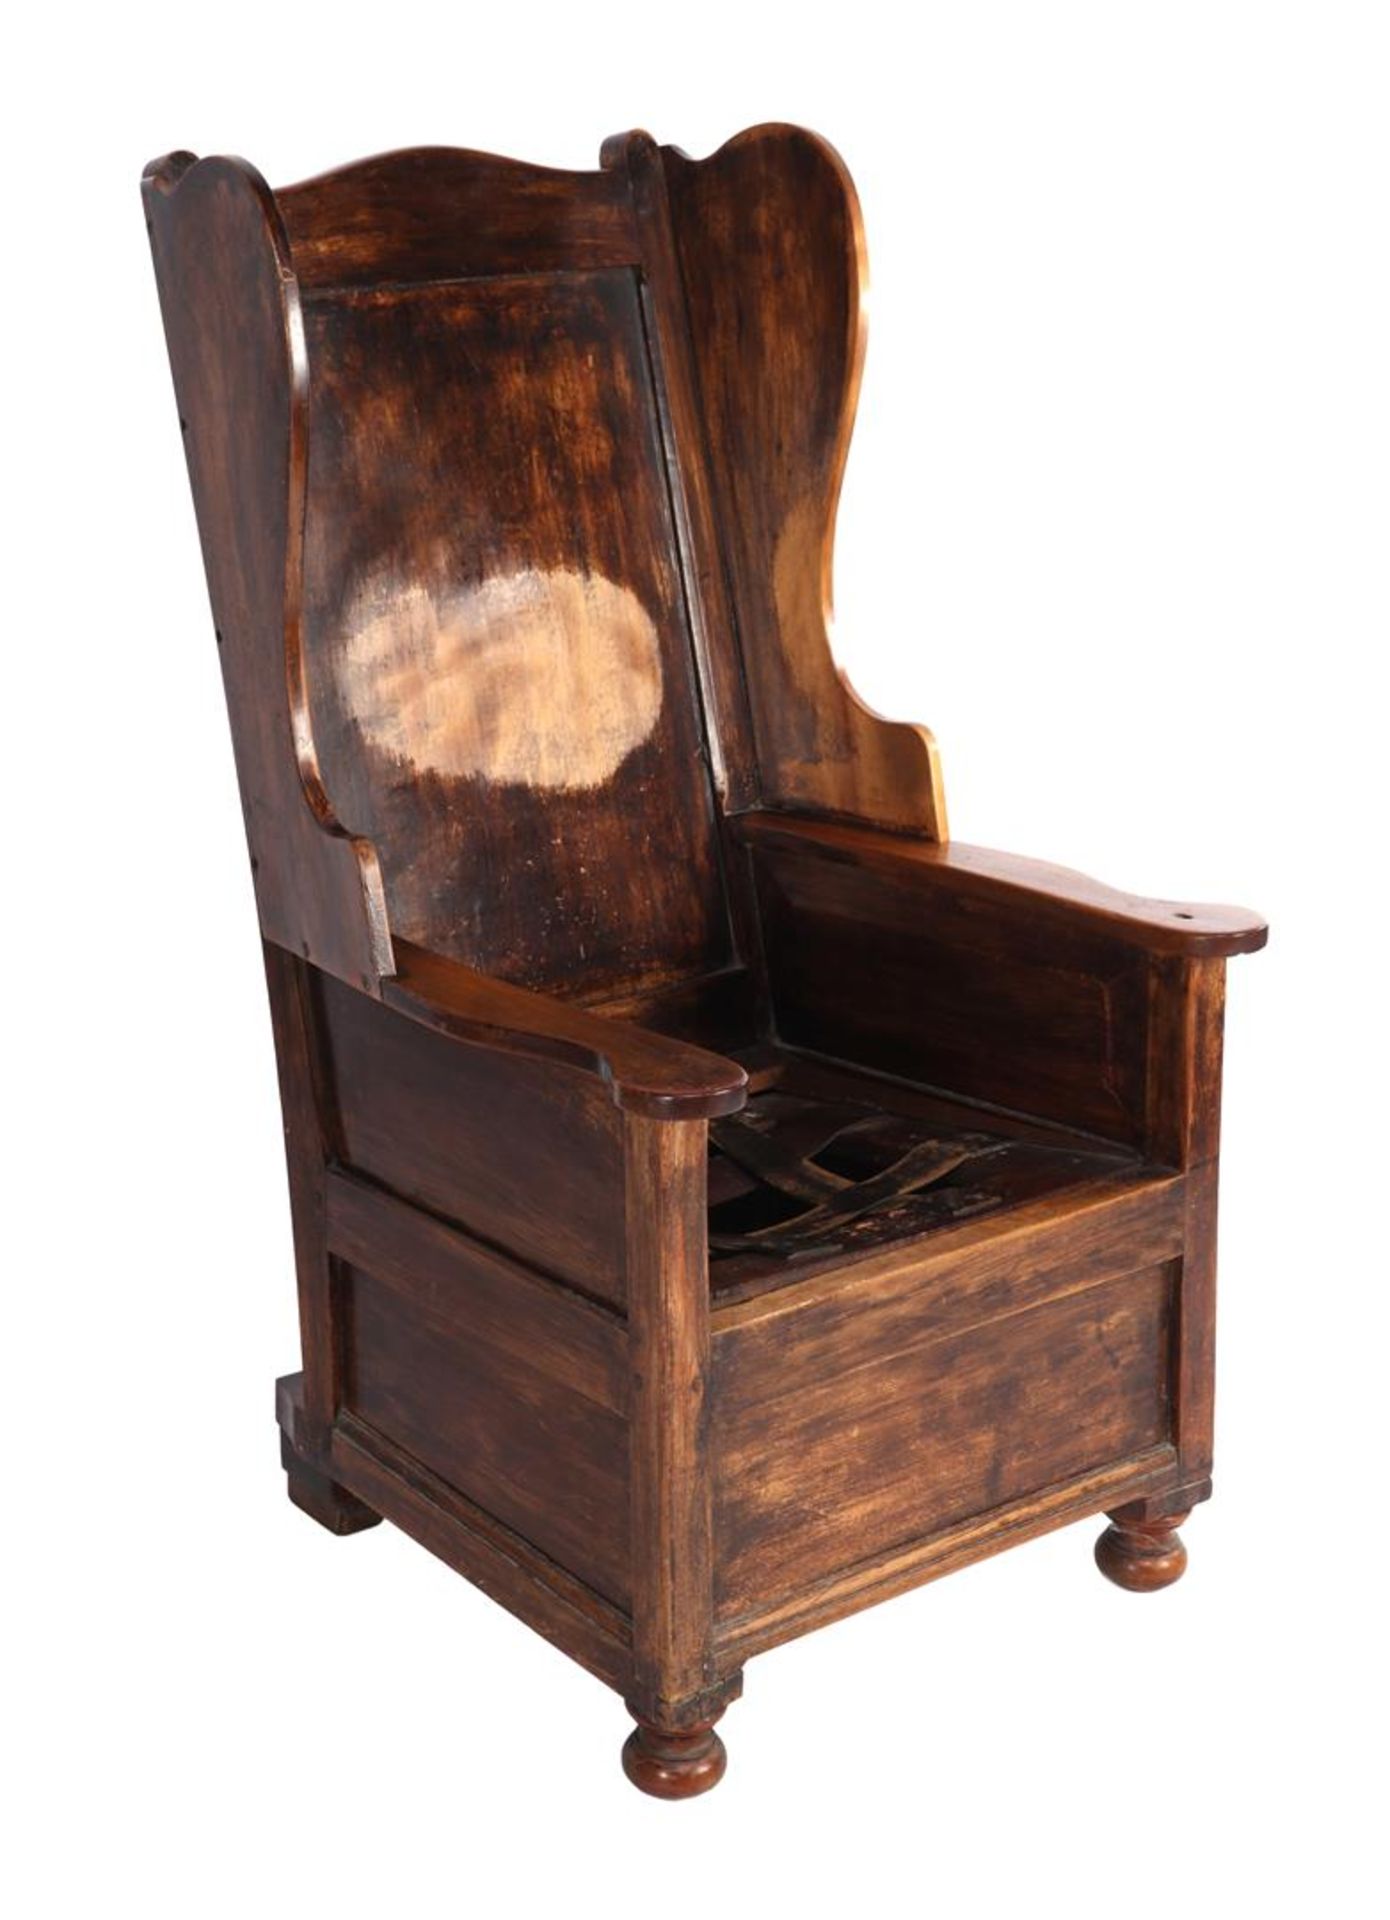 Elm wood baking chair/lambing chair